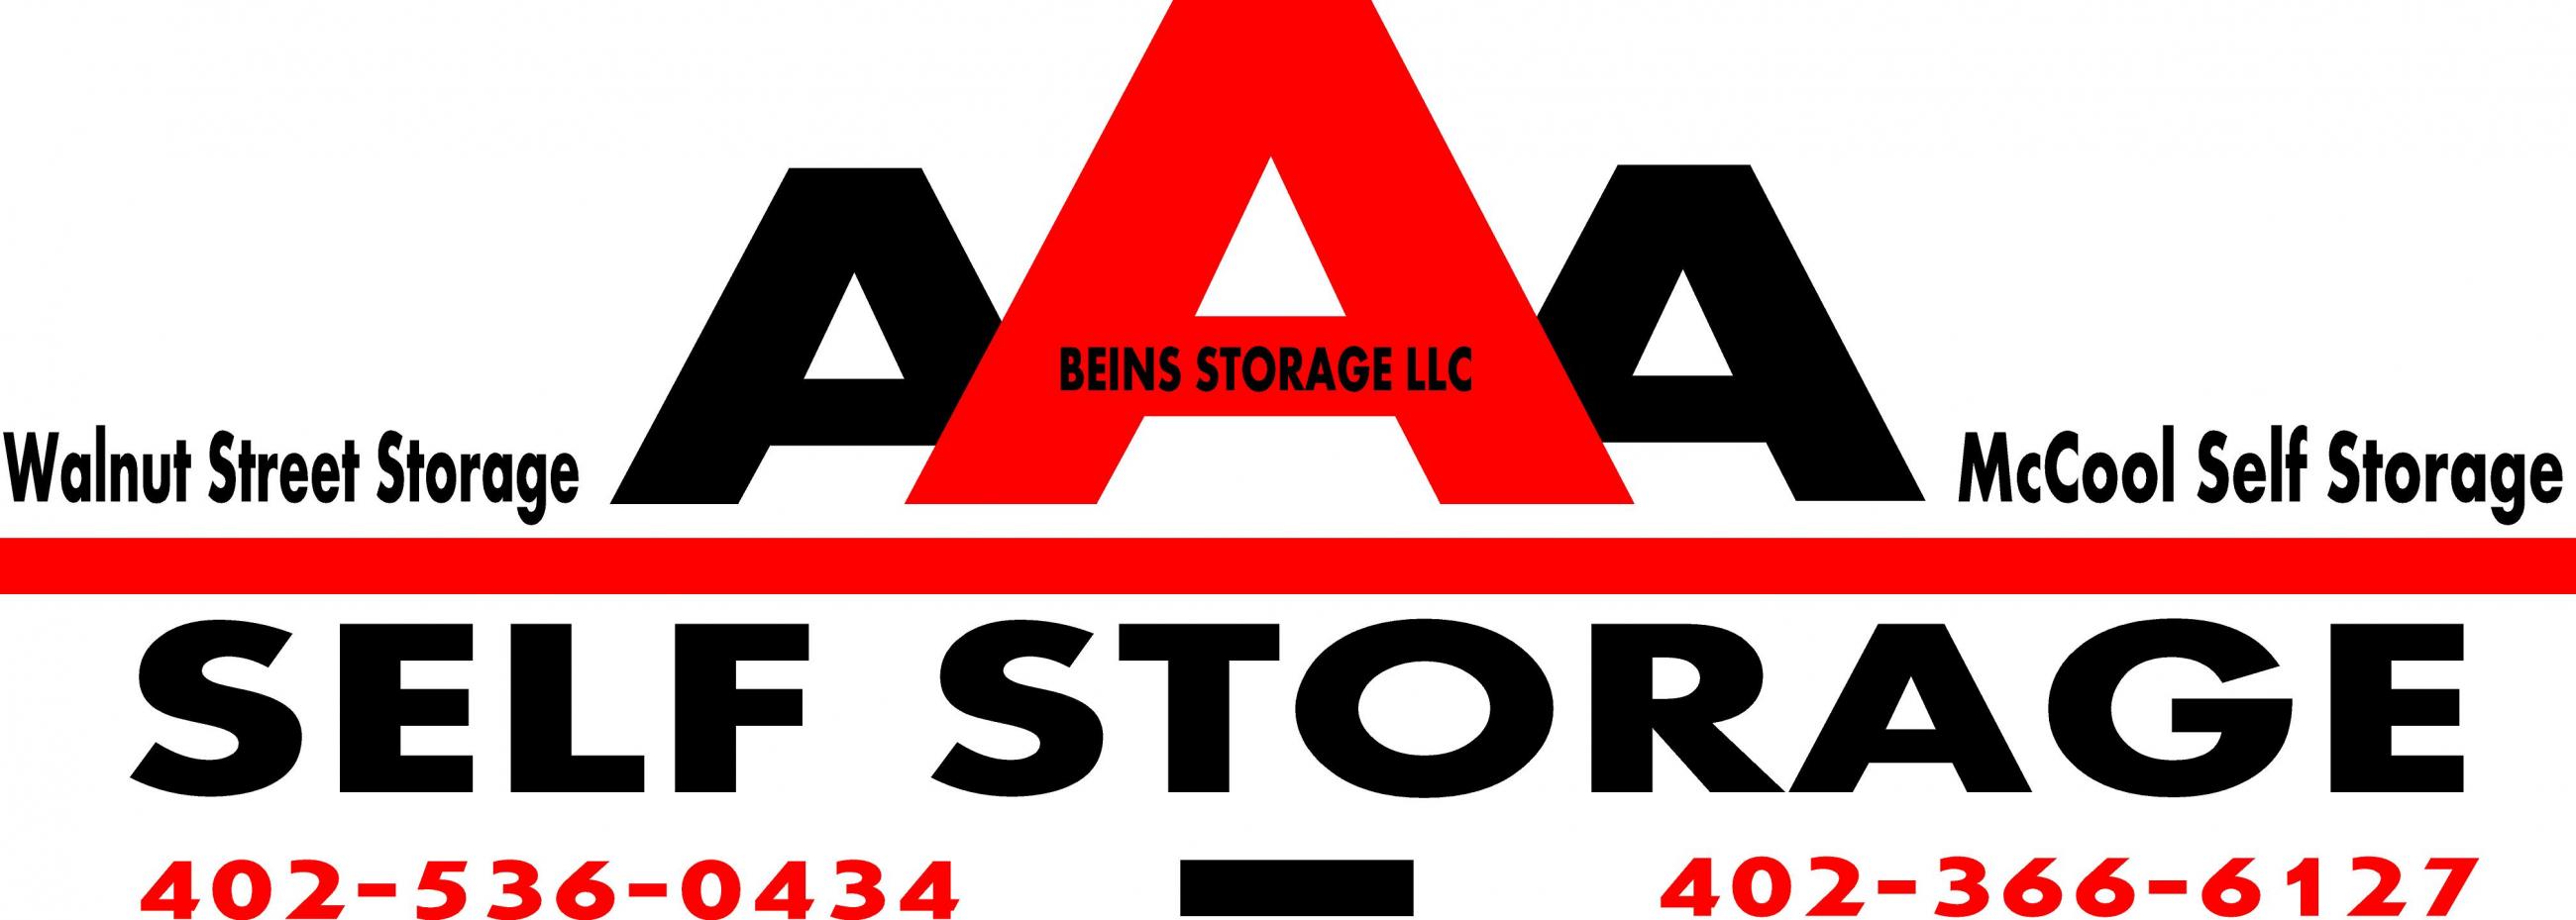 Business Spotlight: Beins Storage LLC  -  AAA Self Storage Main Photo